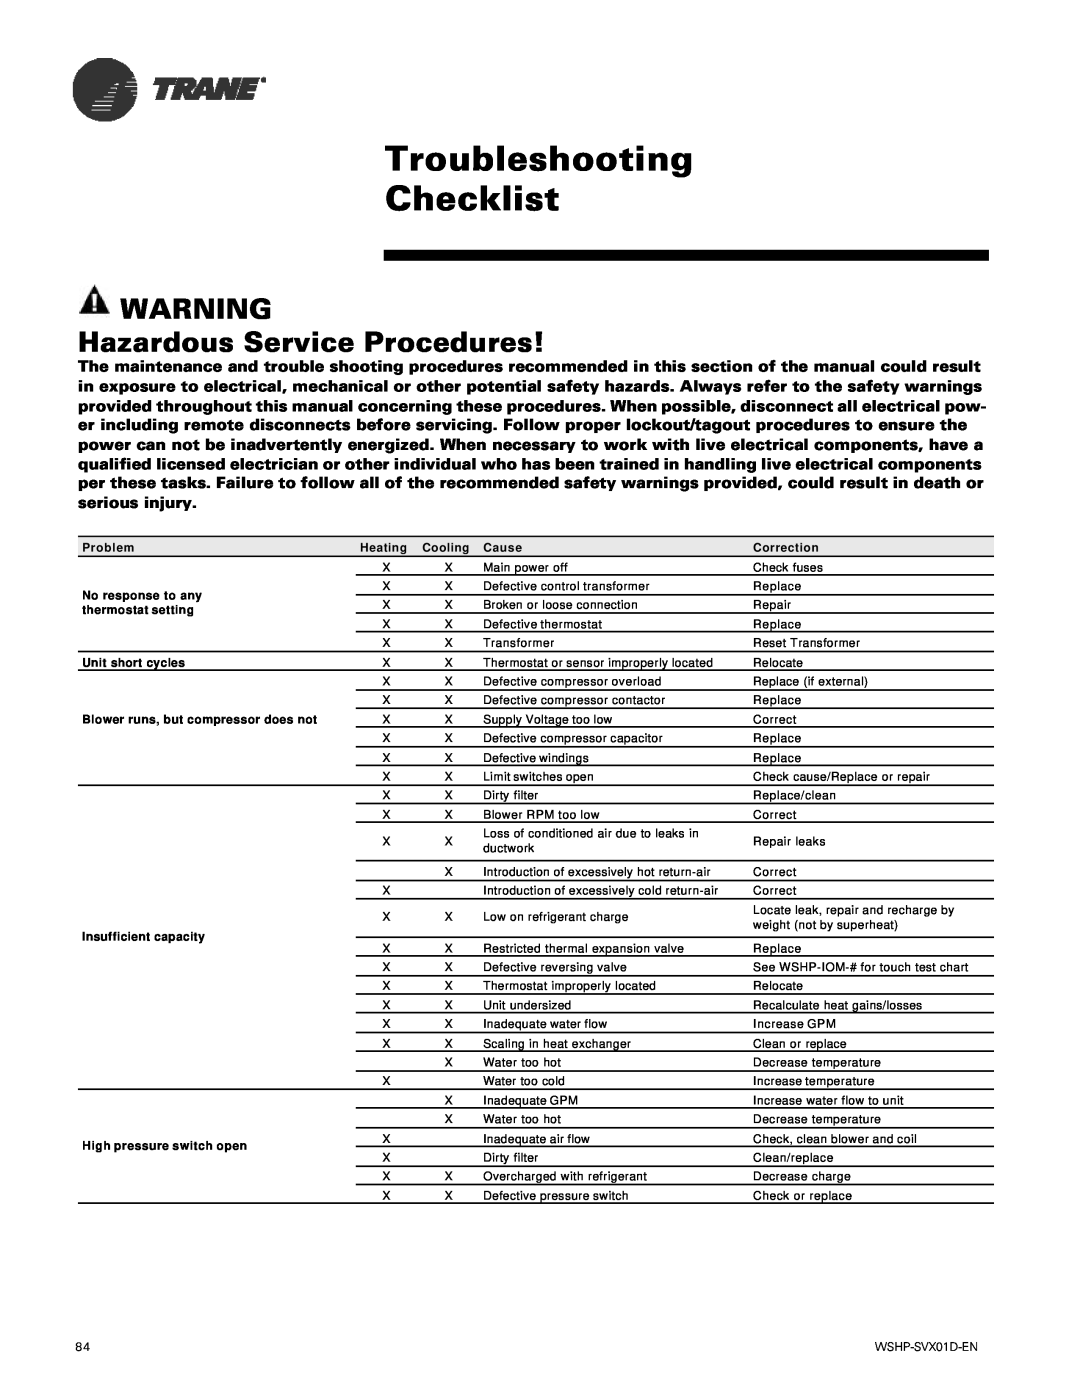 Trane GEH, GEV manual Troubleshooting Checklist, Hazardous Service Procedures 